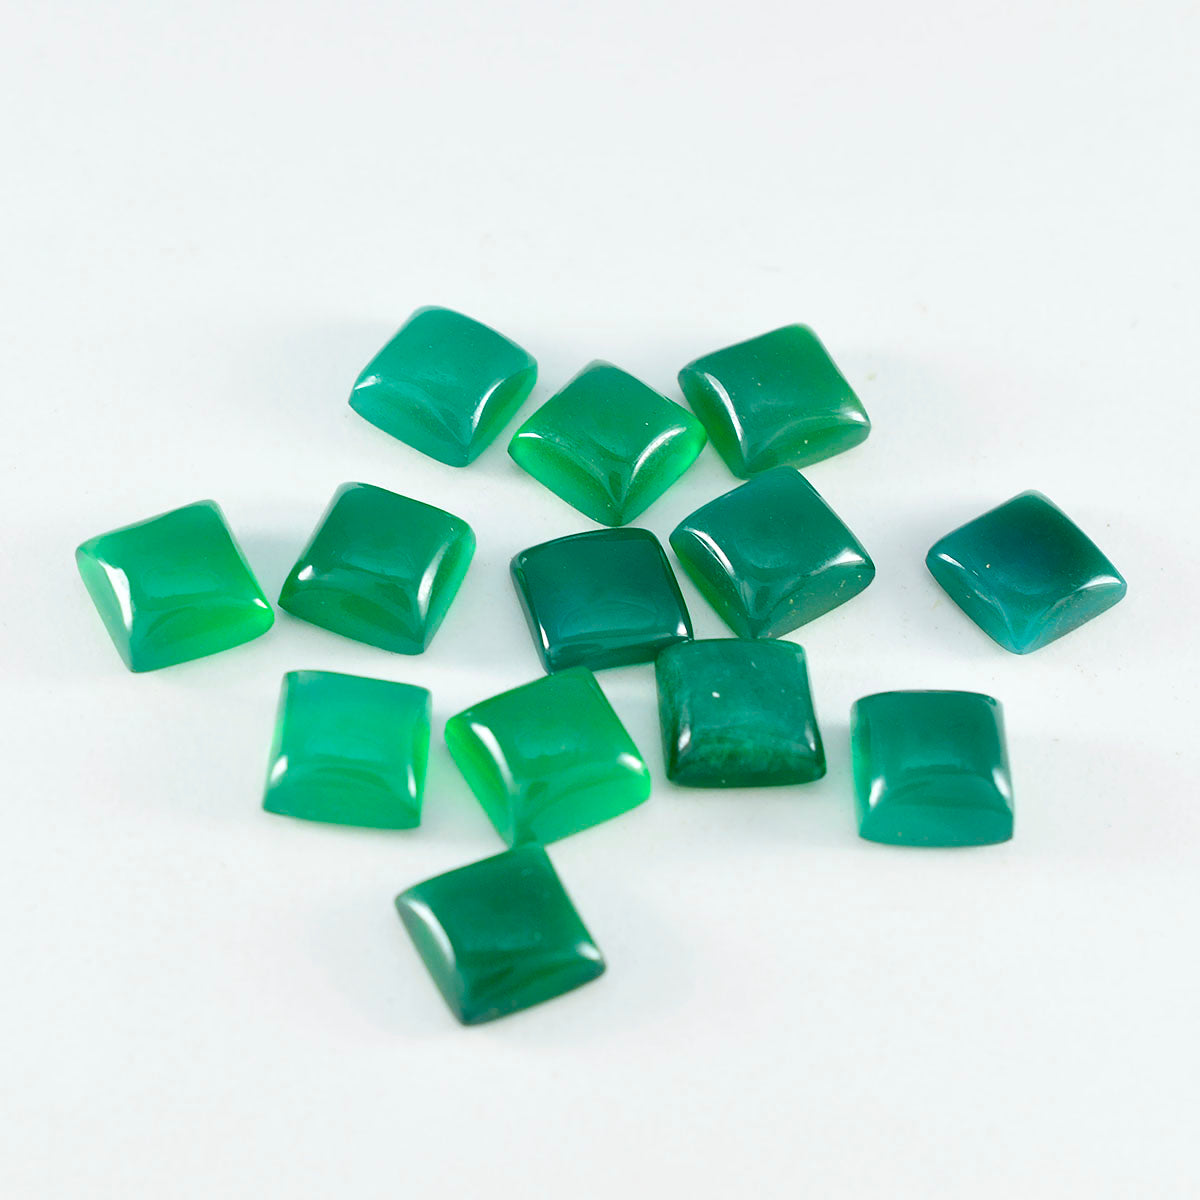 Riyogems 1 Stück grüner Onyx-Cabochon, 4 x 4 mm, quadratische Form, A+1-Qualitätsedelstein